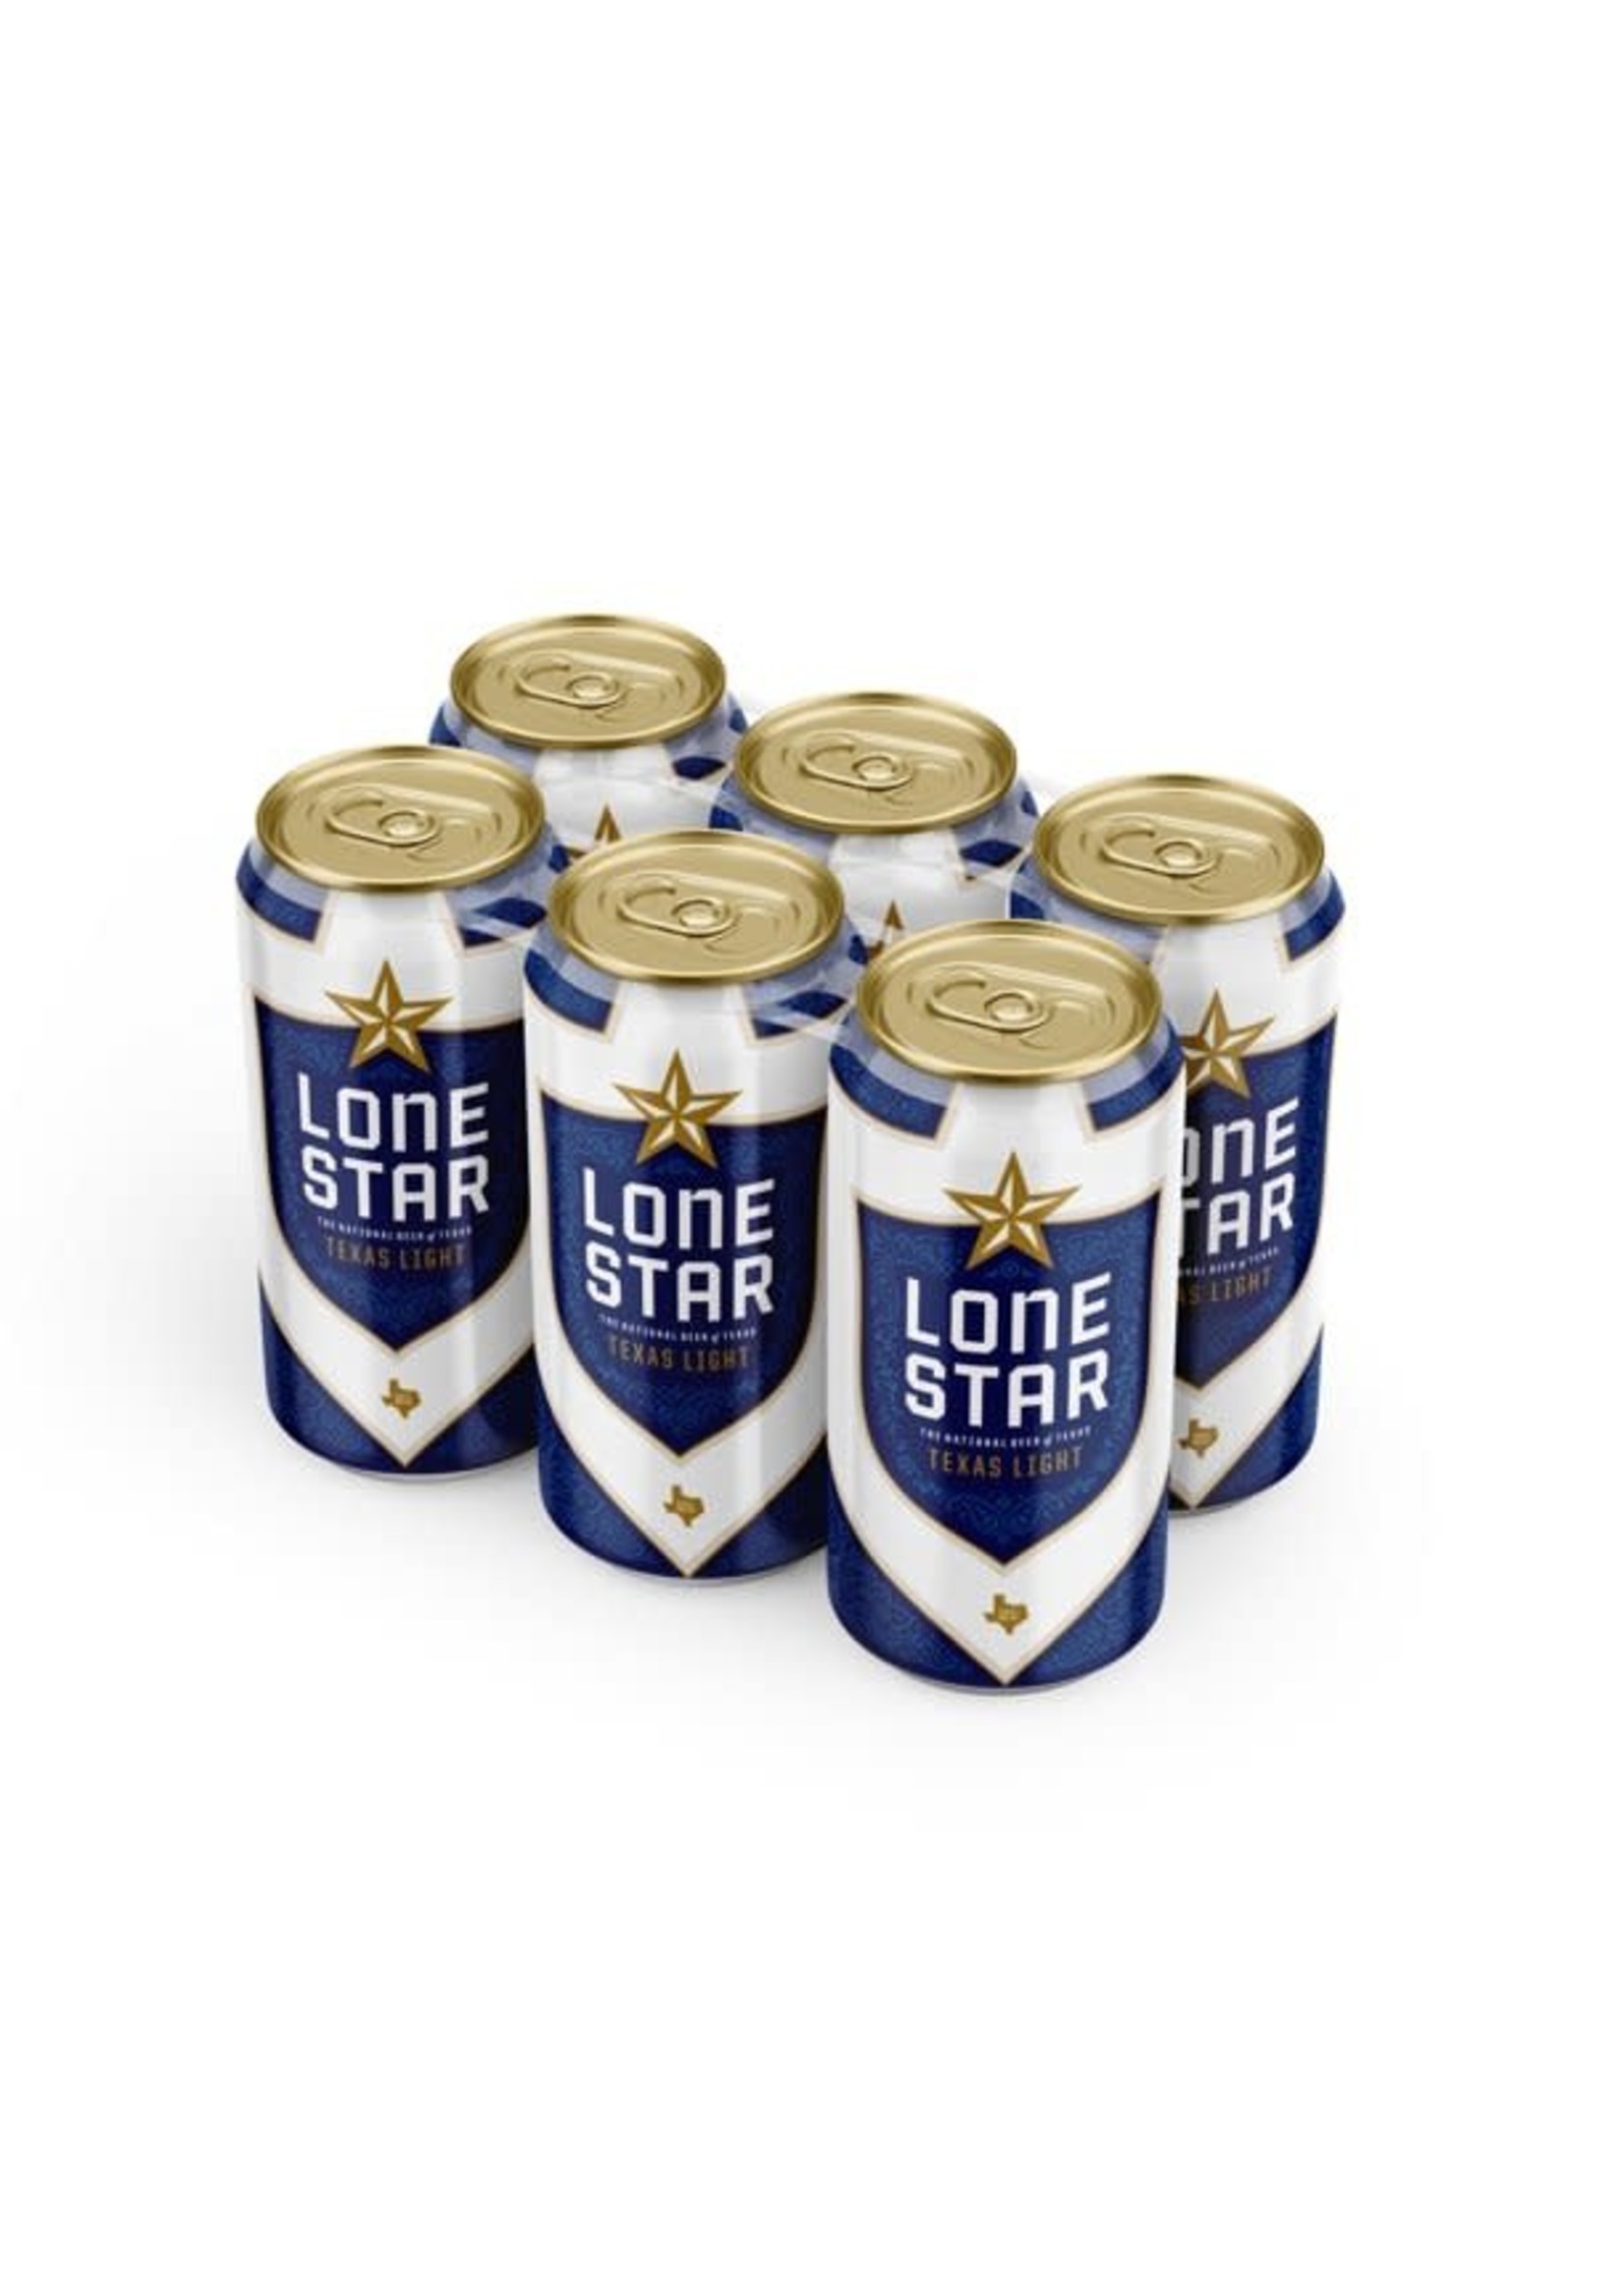 Lone Star Light 6pk 16oz Cans